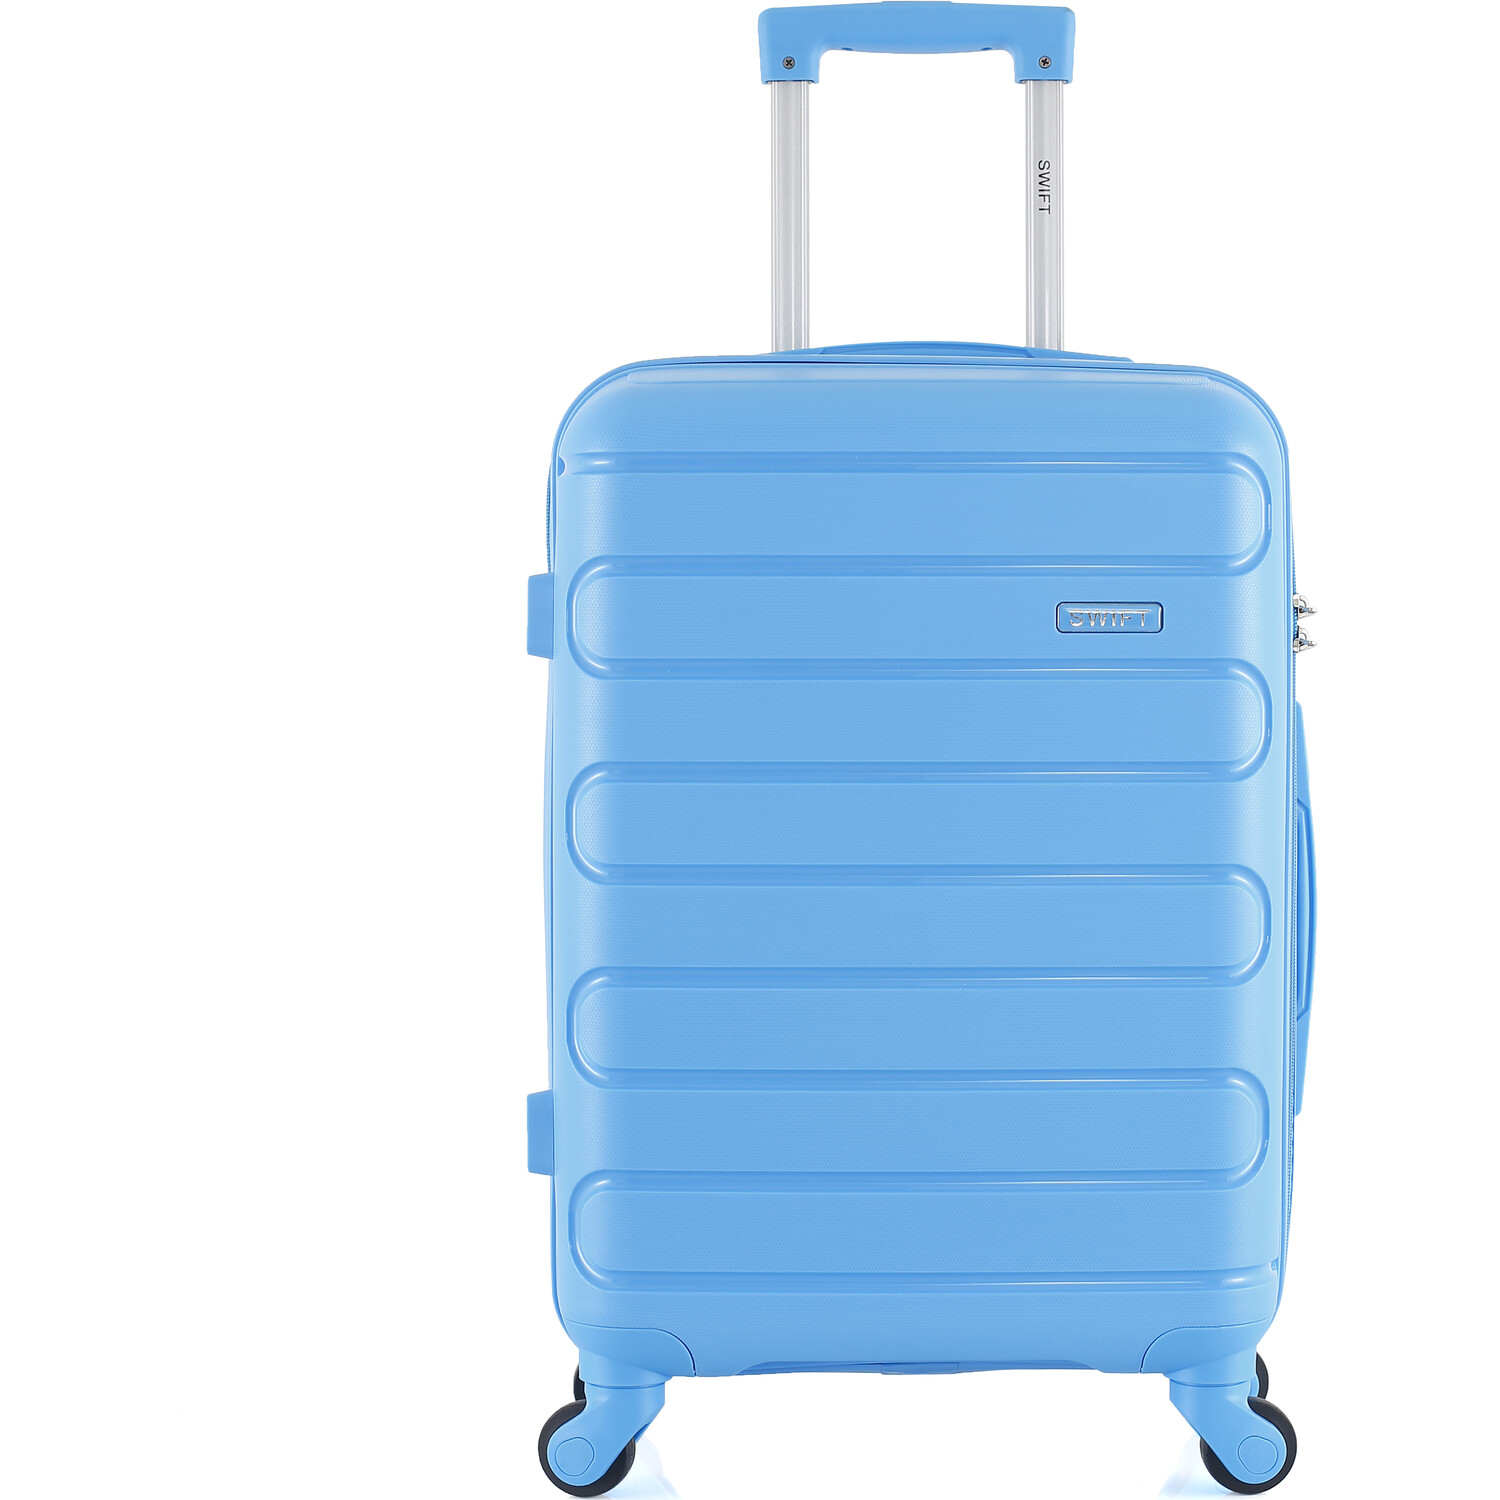 Swift Horizon Suitcase - Deep Teal / Cabin Case Image 1